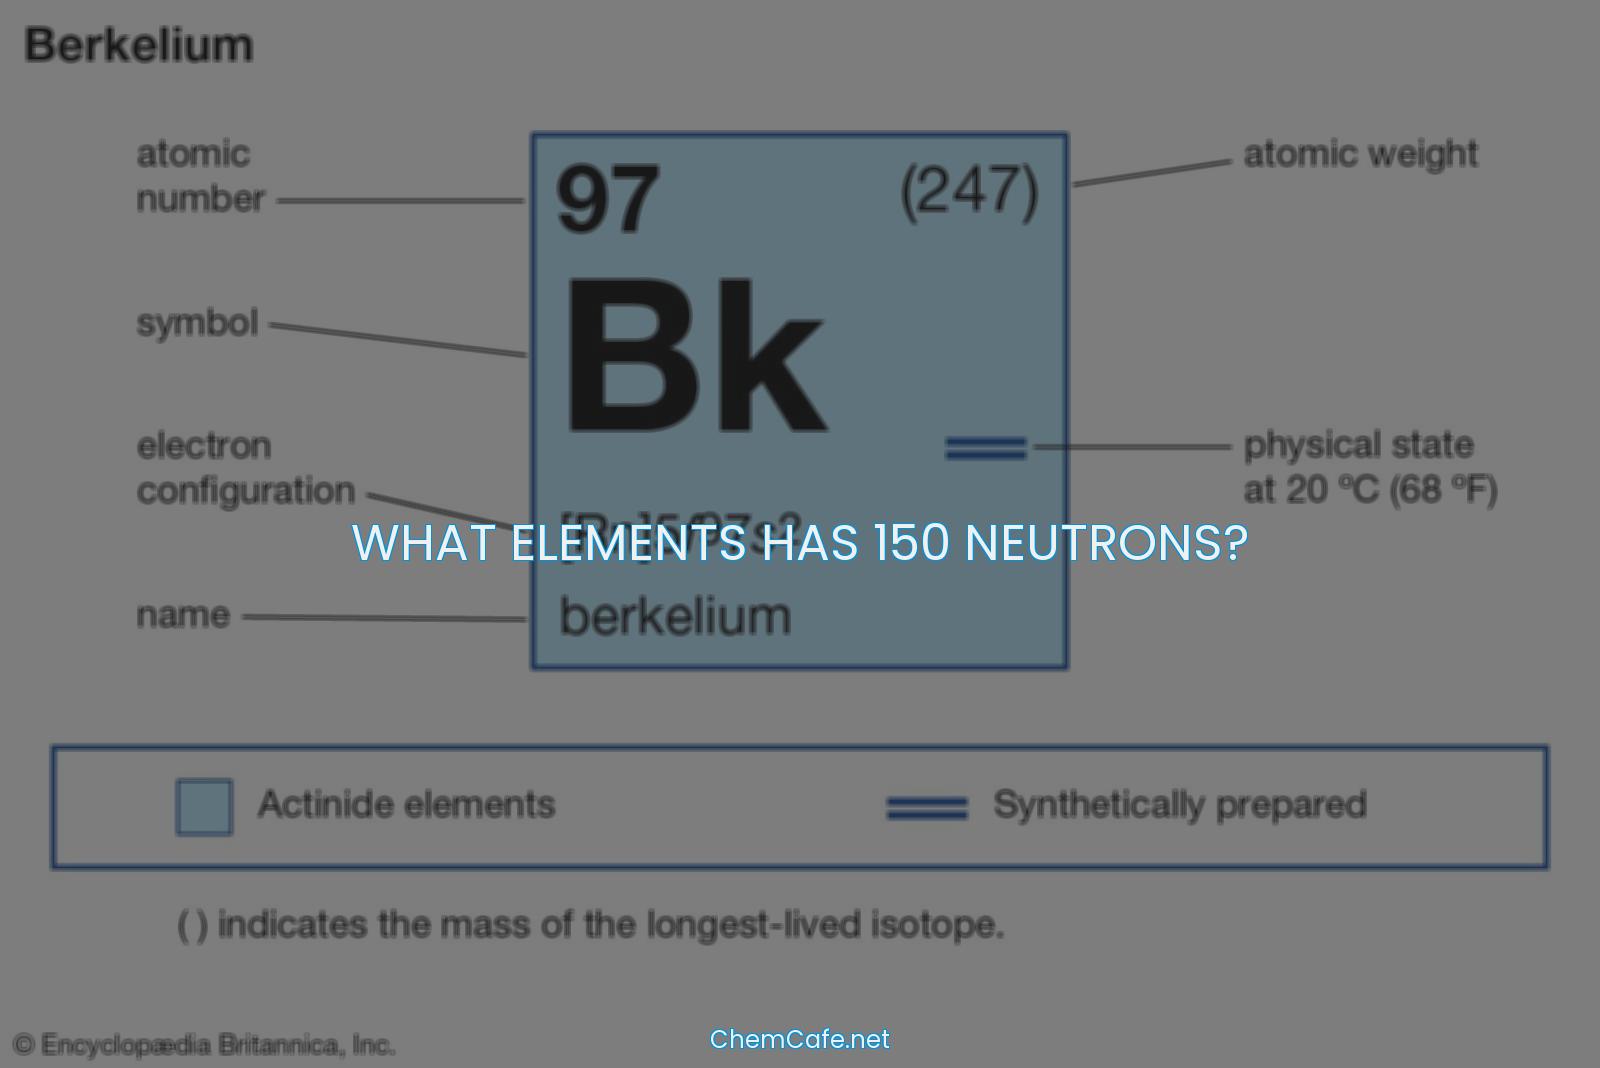 What elements has 150 neutrons?